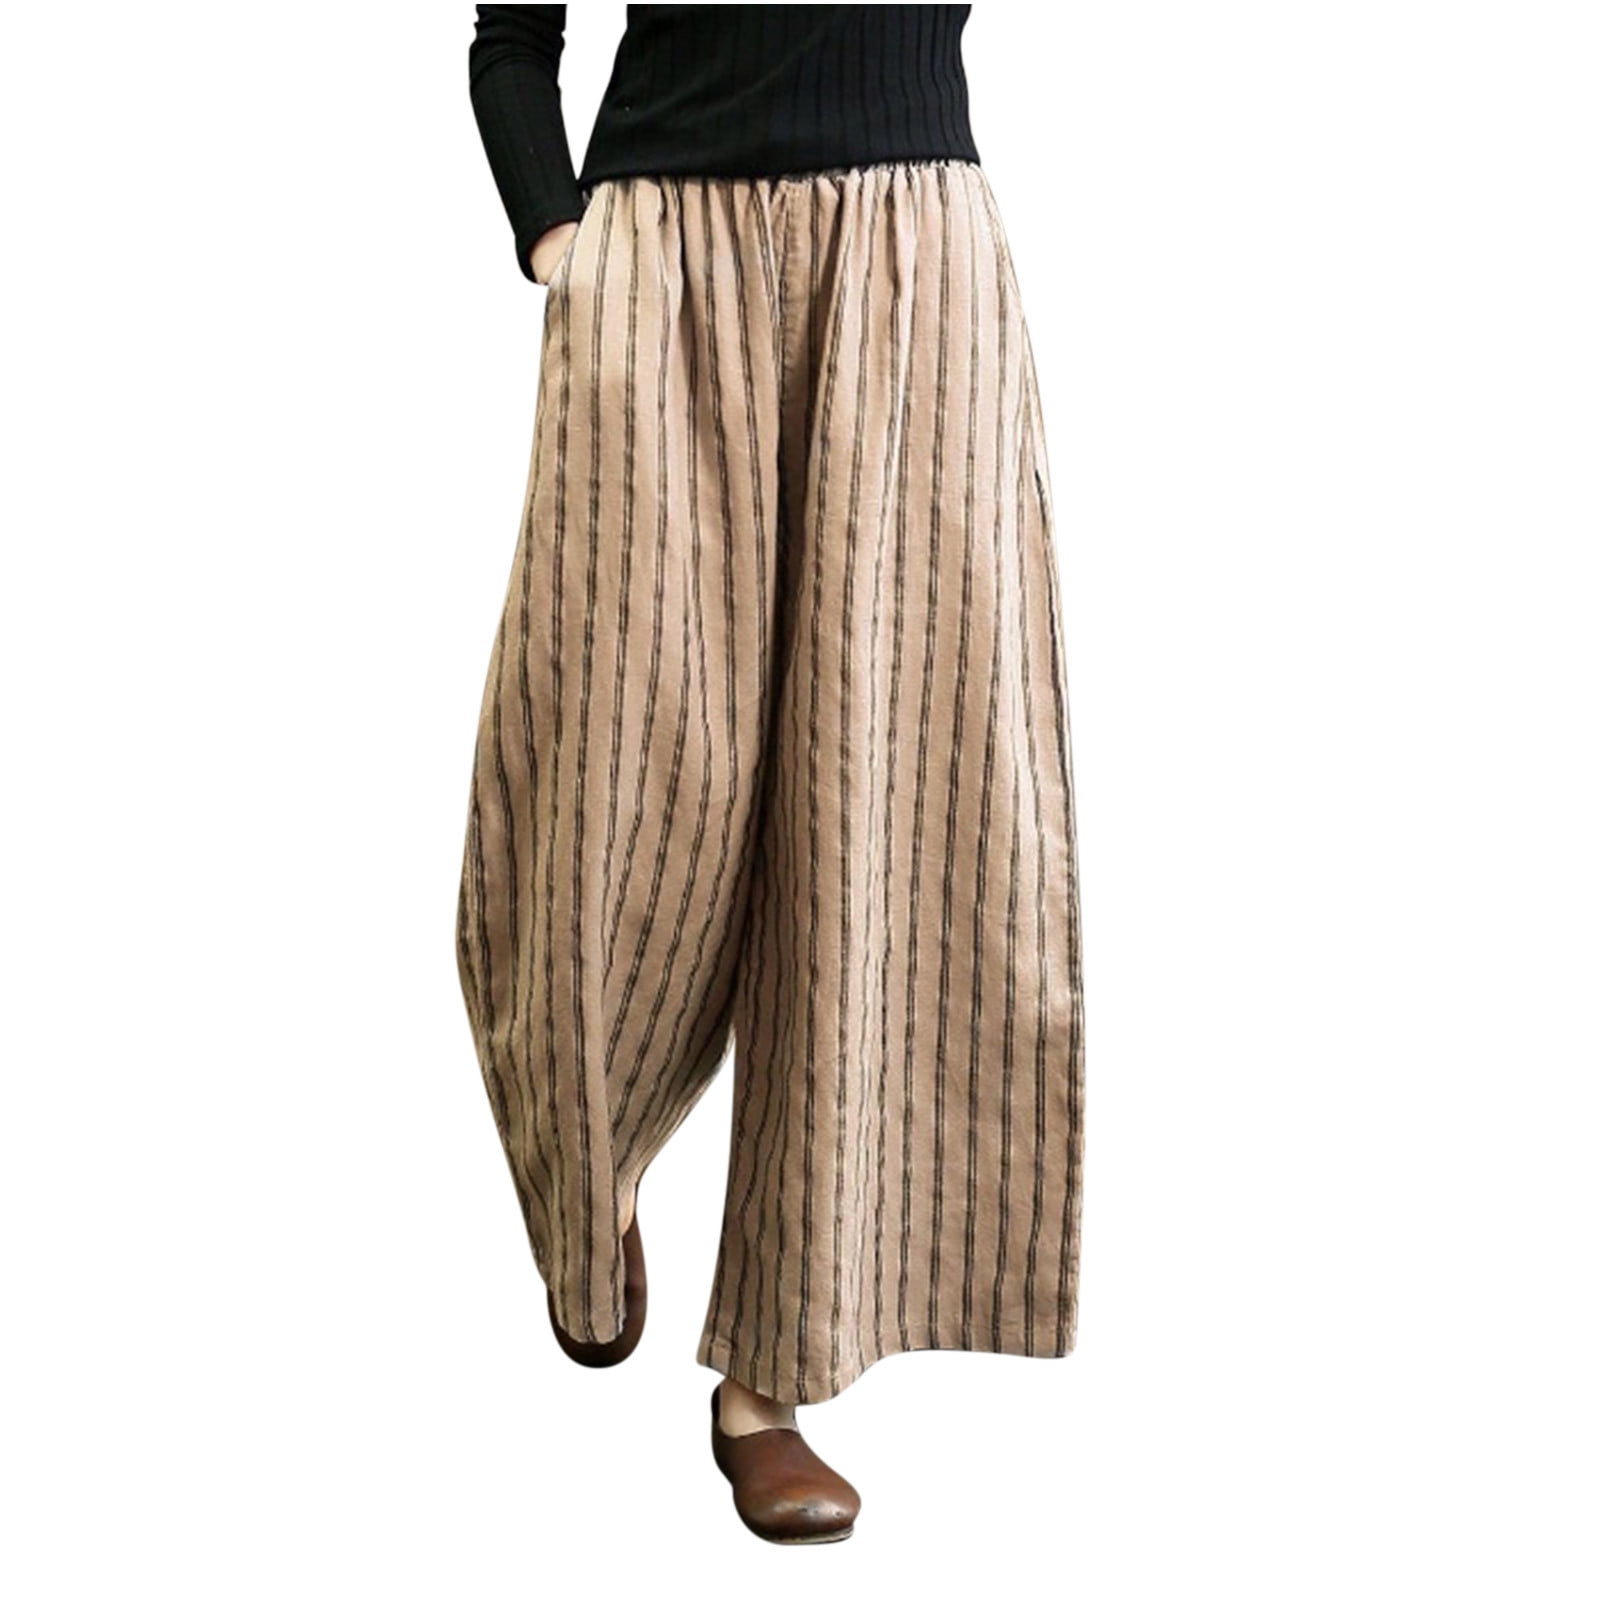 Harem Pants Women - Fashion Cotton Silk Plus Size Women Wide-Leg Pants  Beach Pants Spring Summer Loose Pants Bloomers Casual Pants Trousers  Female,Style4,4Xl price in UAE,  UAE